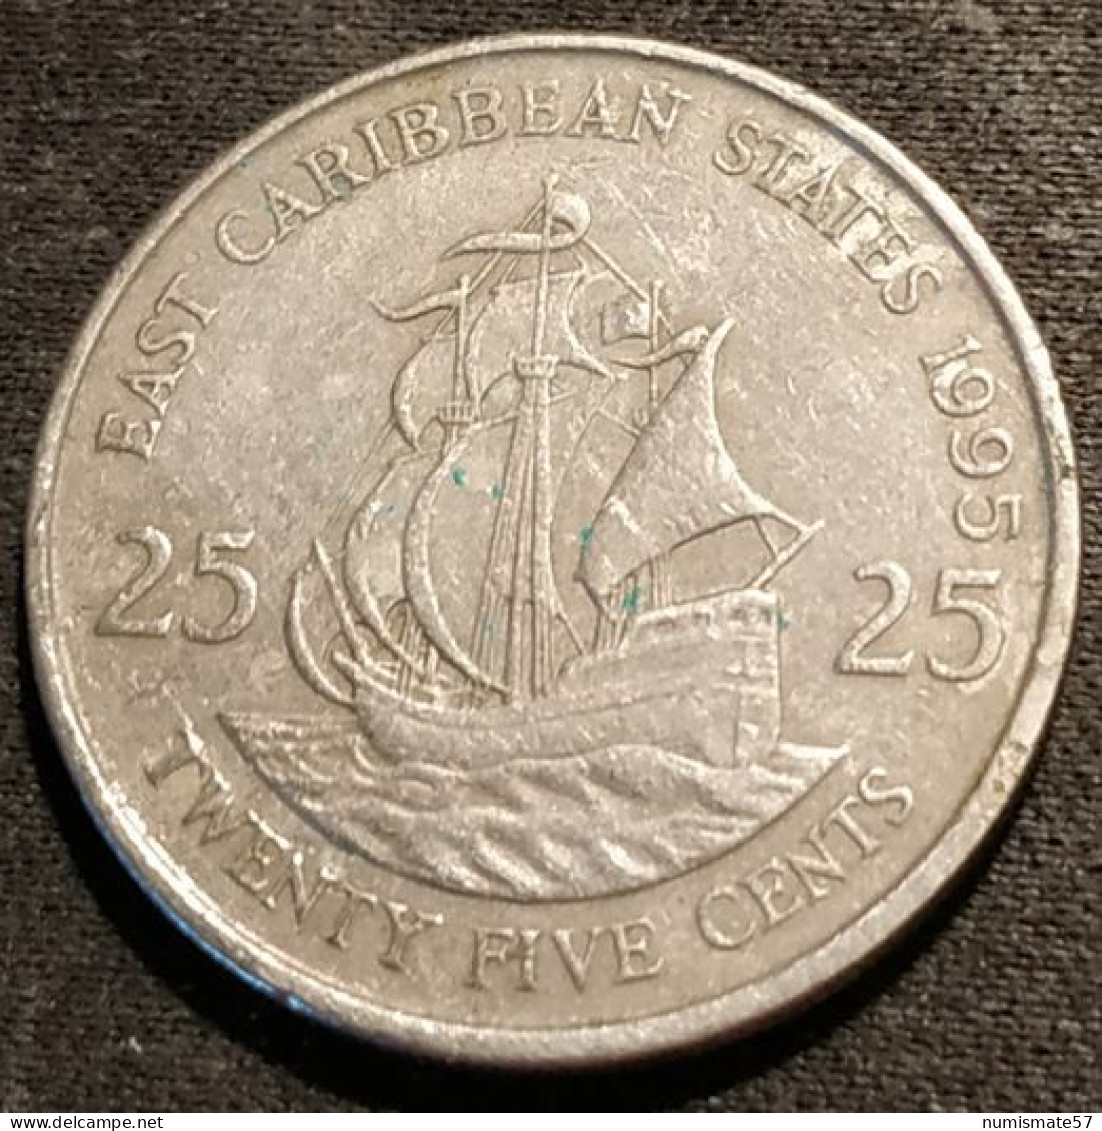 EAST CARIBBEAN STATES - 25 CENTS 1995 - Elizabeth II - 2e Effigie - KM 14 - ( Caraibes ) - East Caribbean States